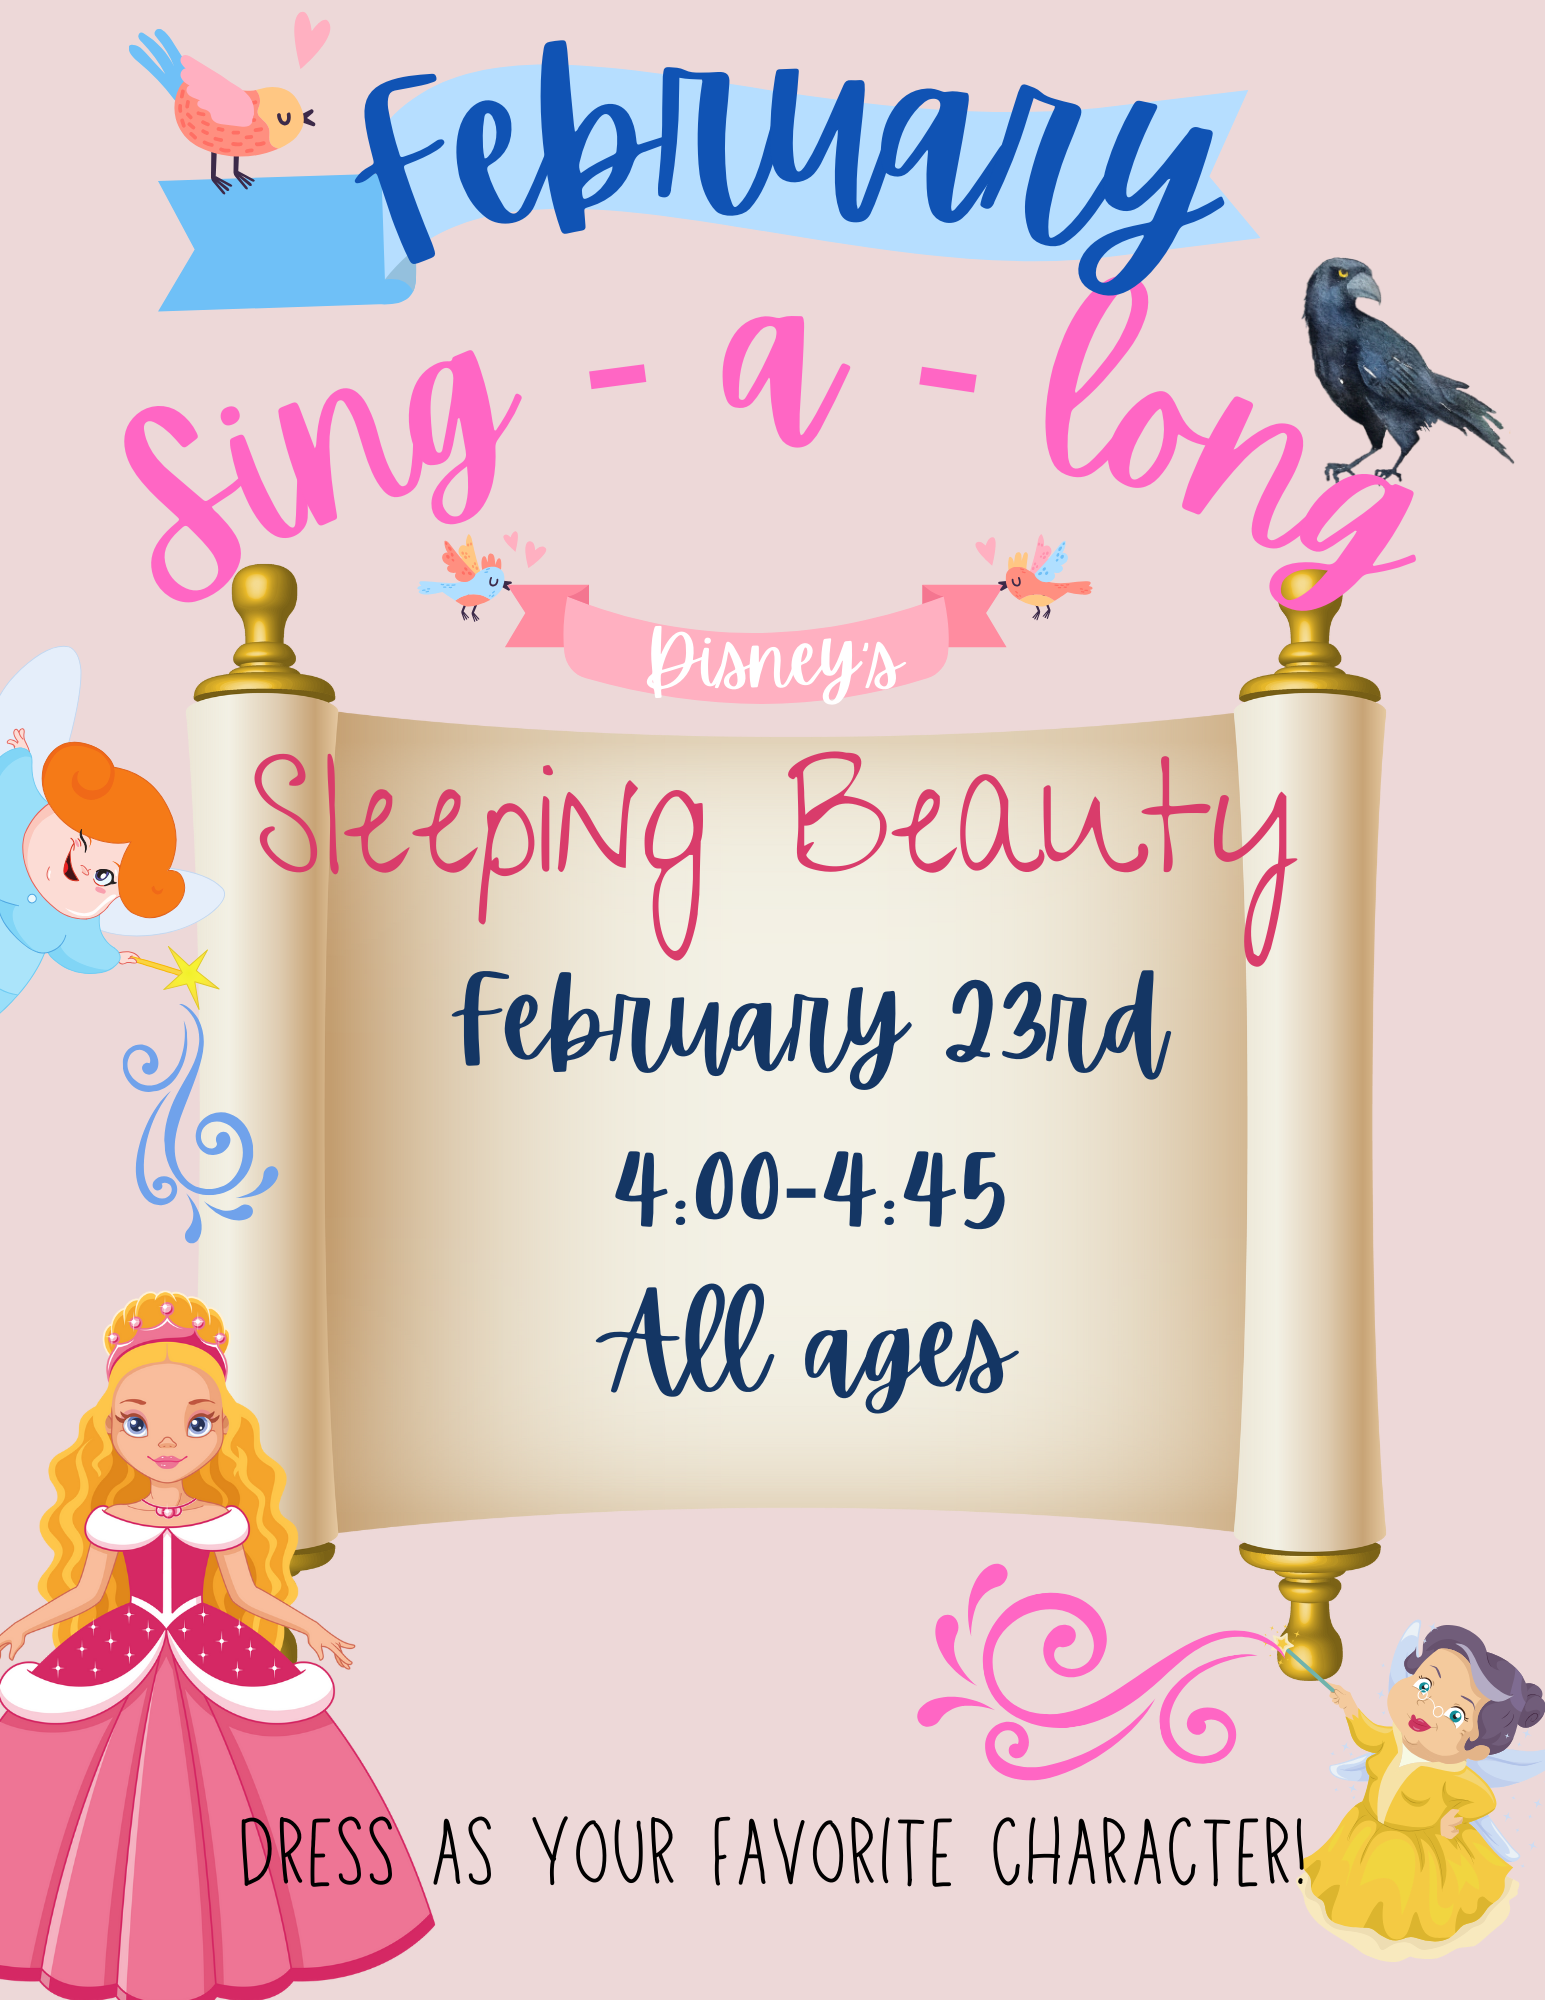 Sleeping Beauty Sing-a-long